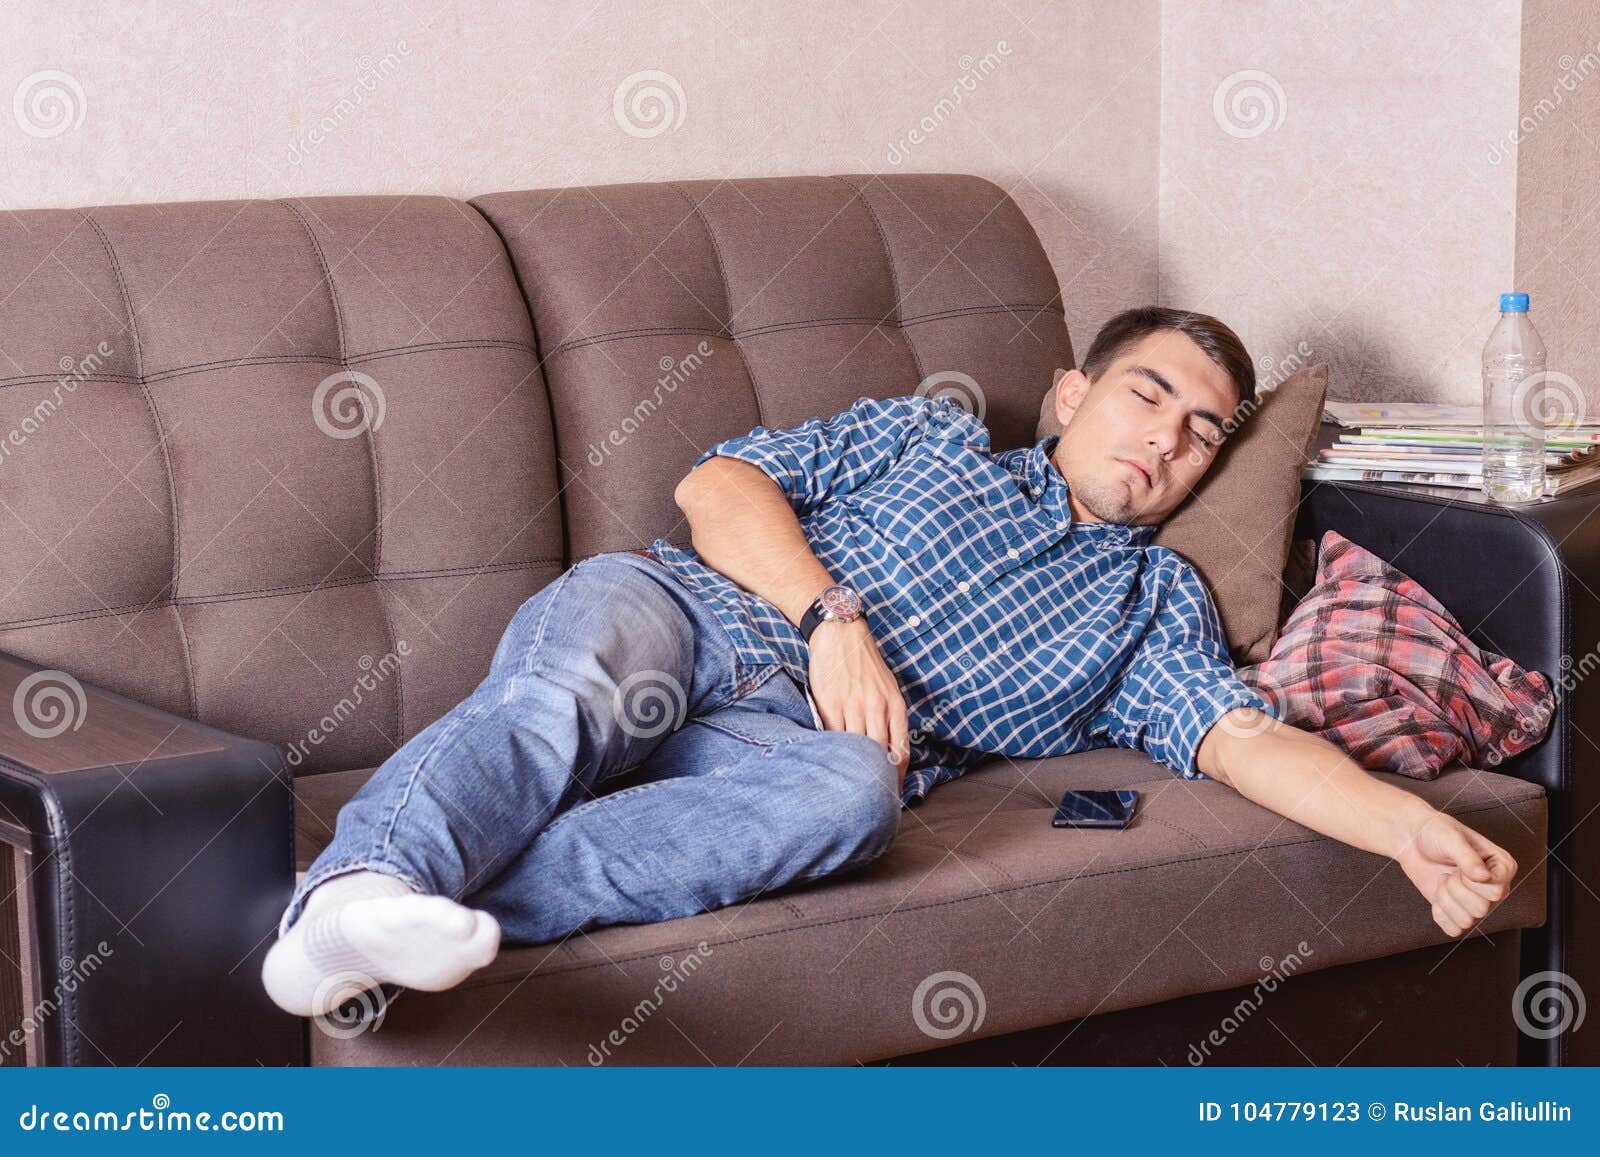 Лежит муж русская. Человек на диване. Мужчина на диване. Мужчина в кресле. Парень на диване.